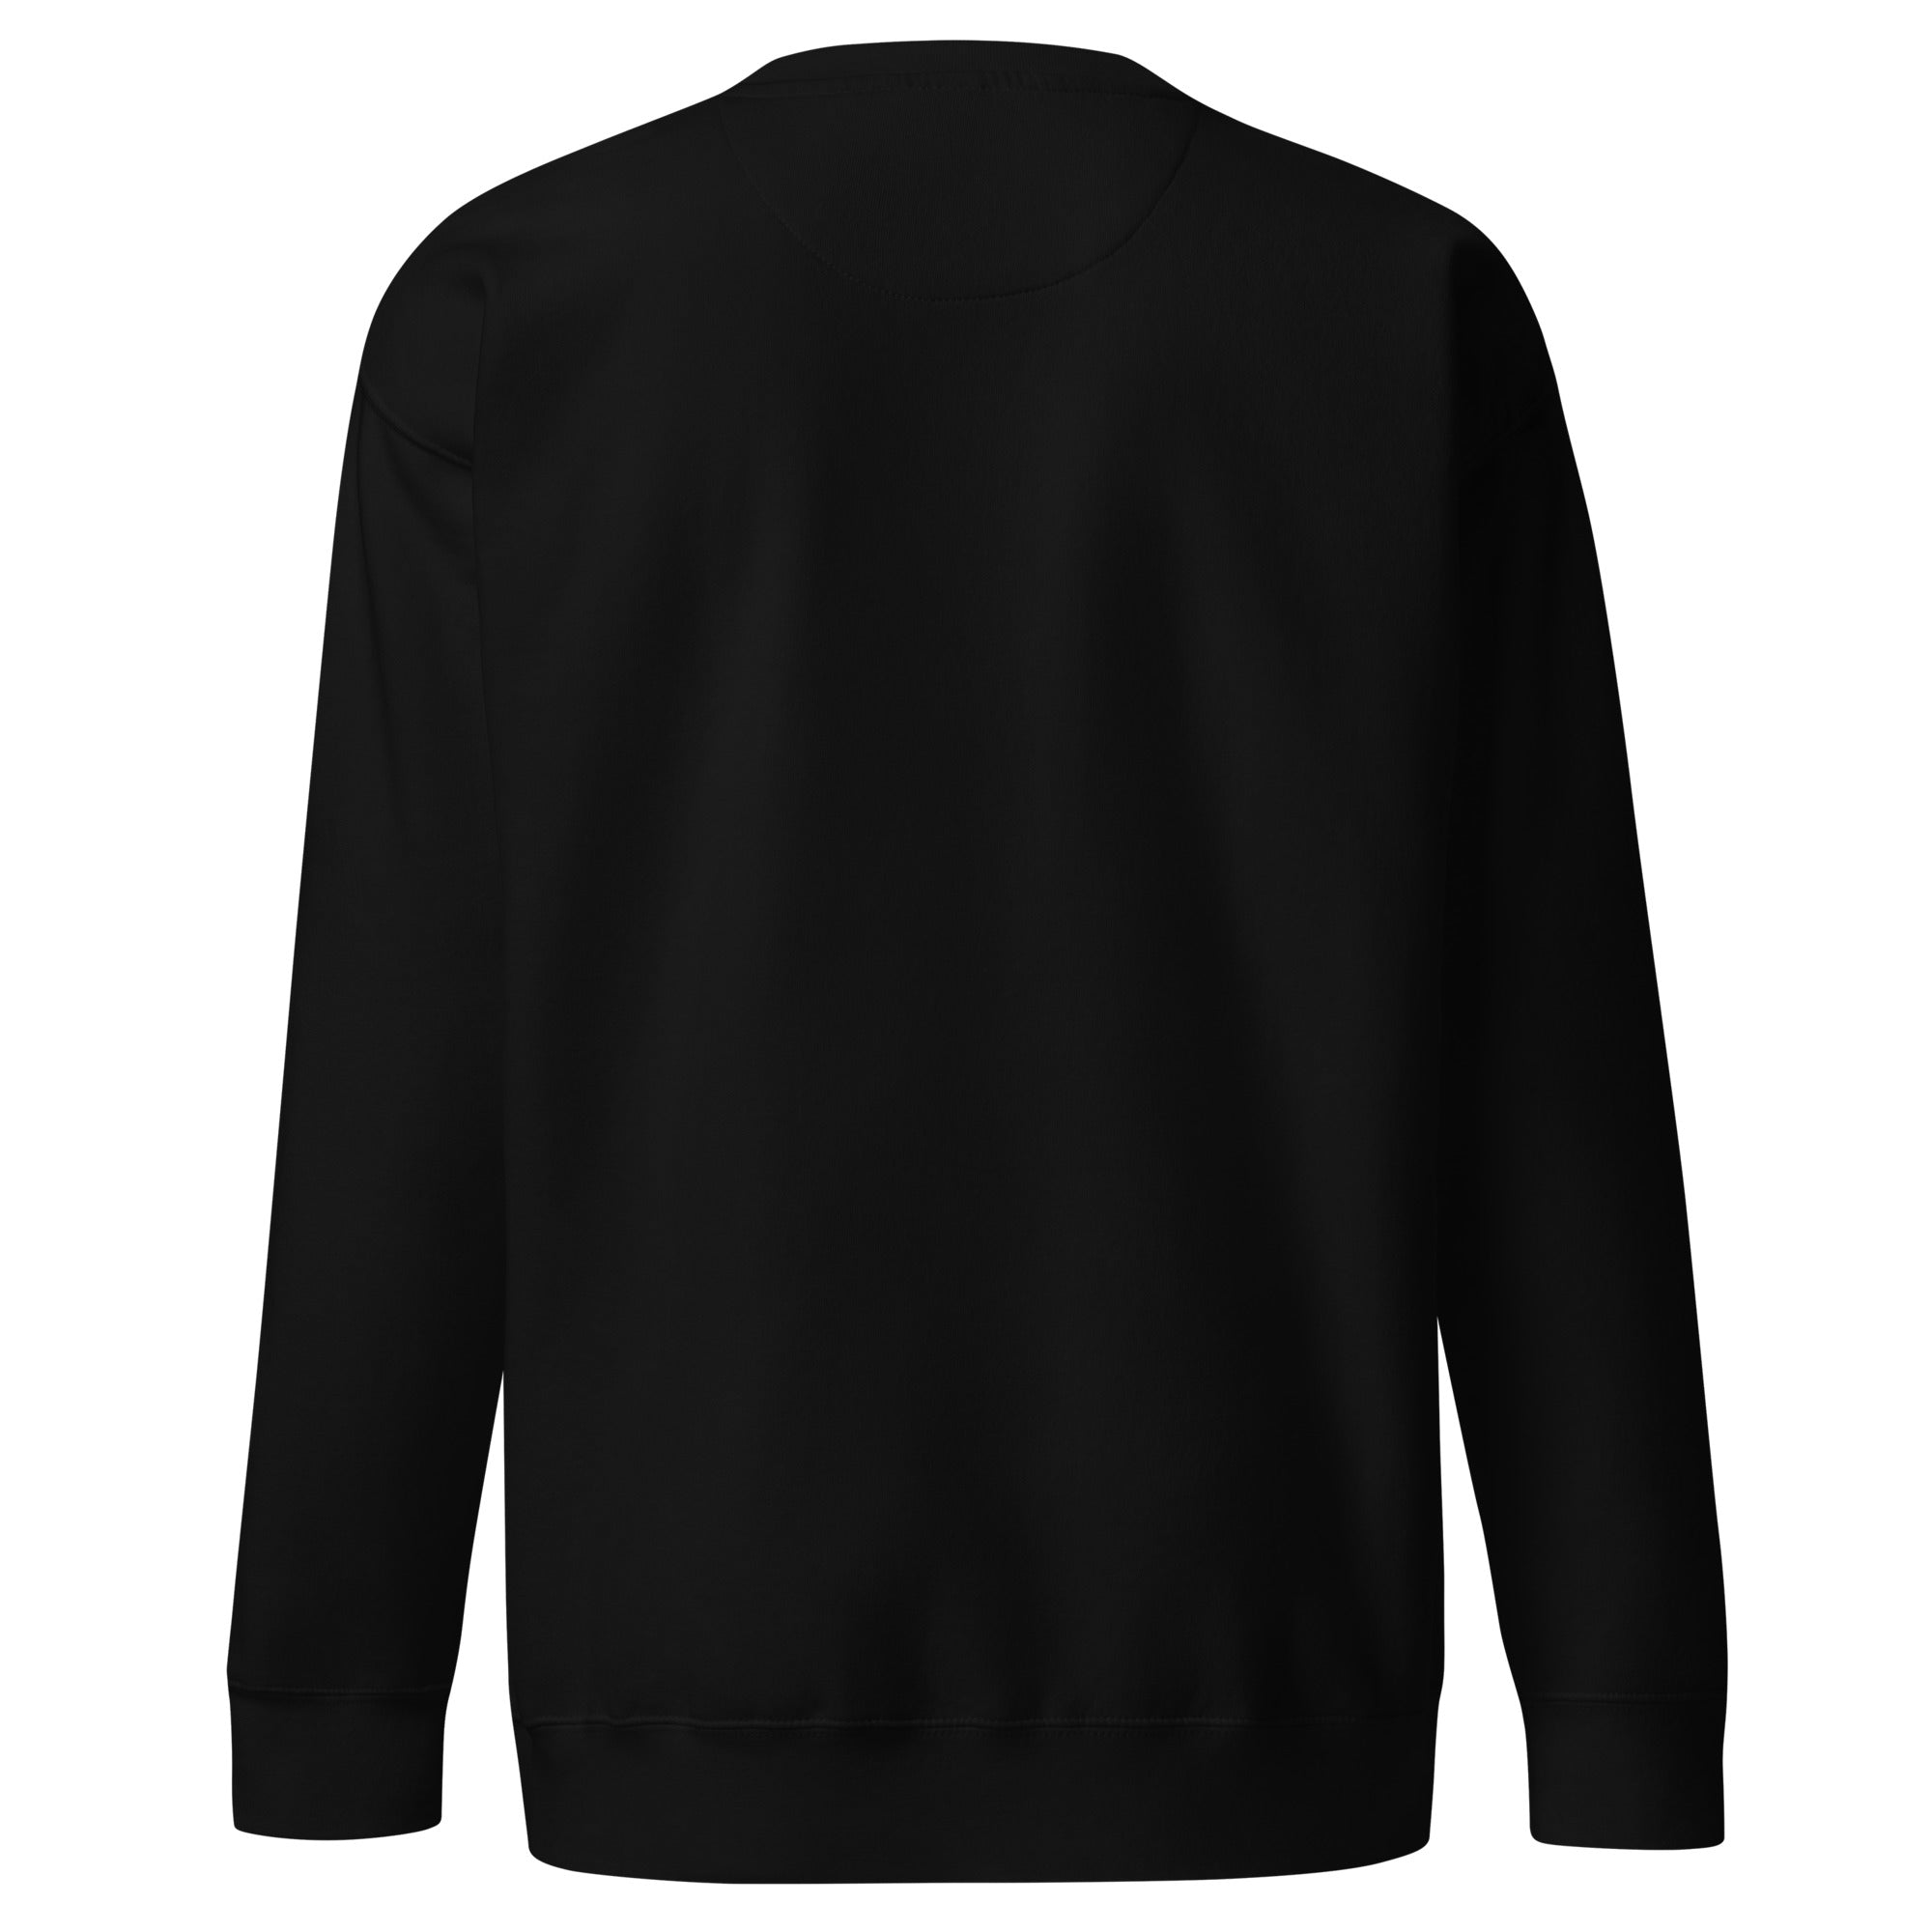 PAIN Cloud Embroidered Premium Crewneck Sweatshirt